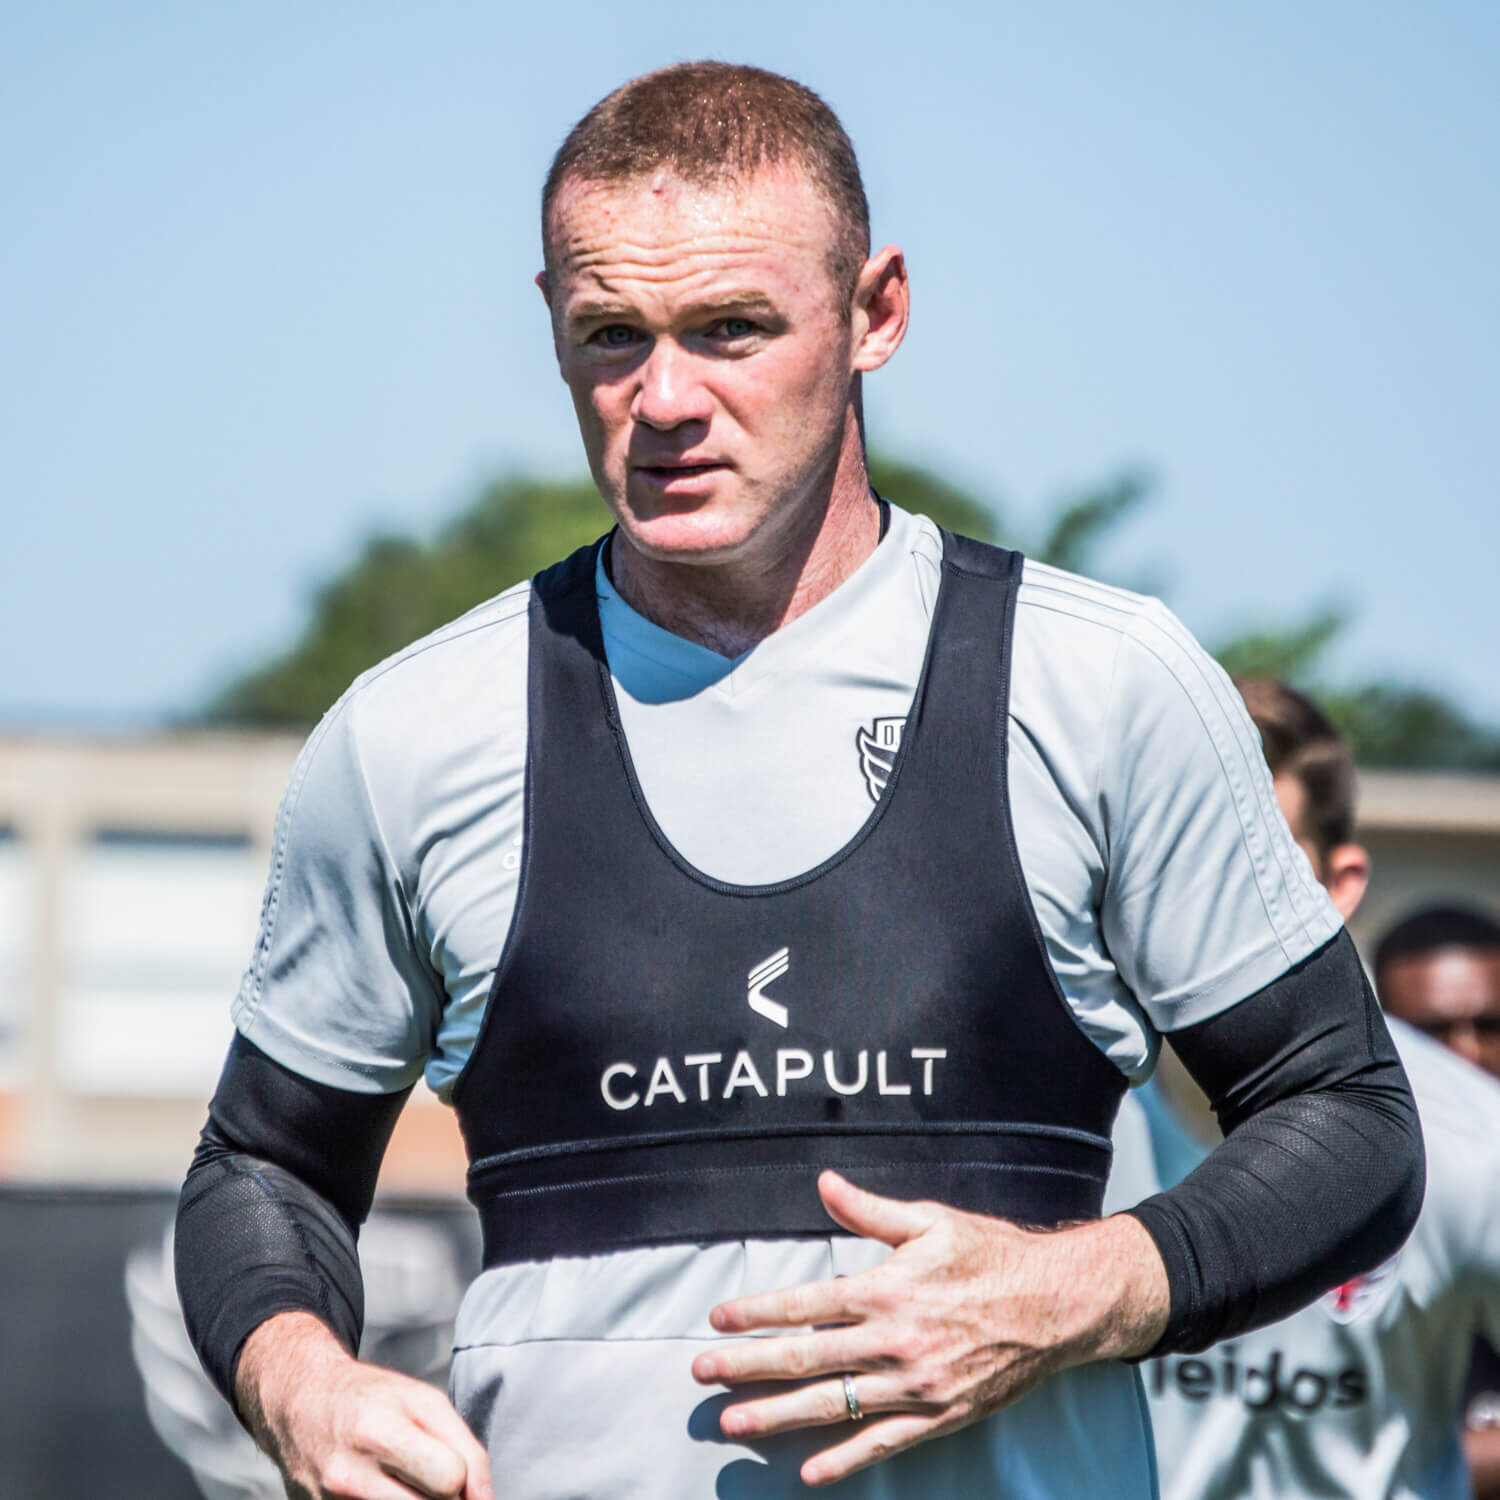 Wayne-Rooney-DC-United-Training-Soccer-2018-crvnka-Photography-16.JPG